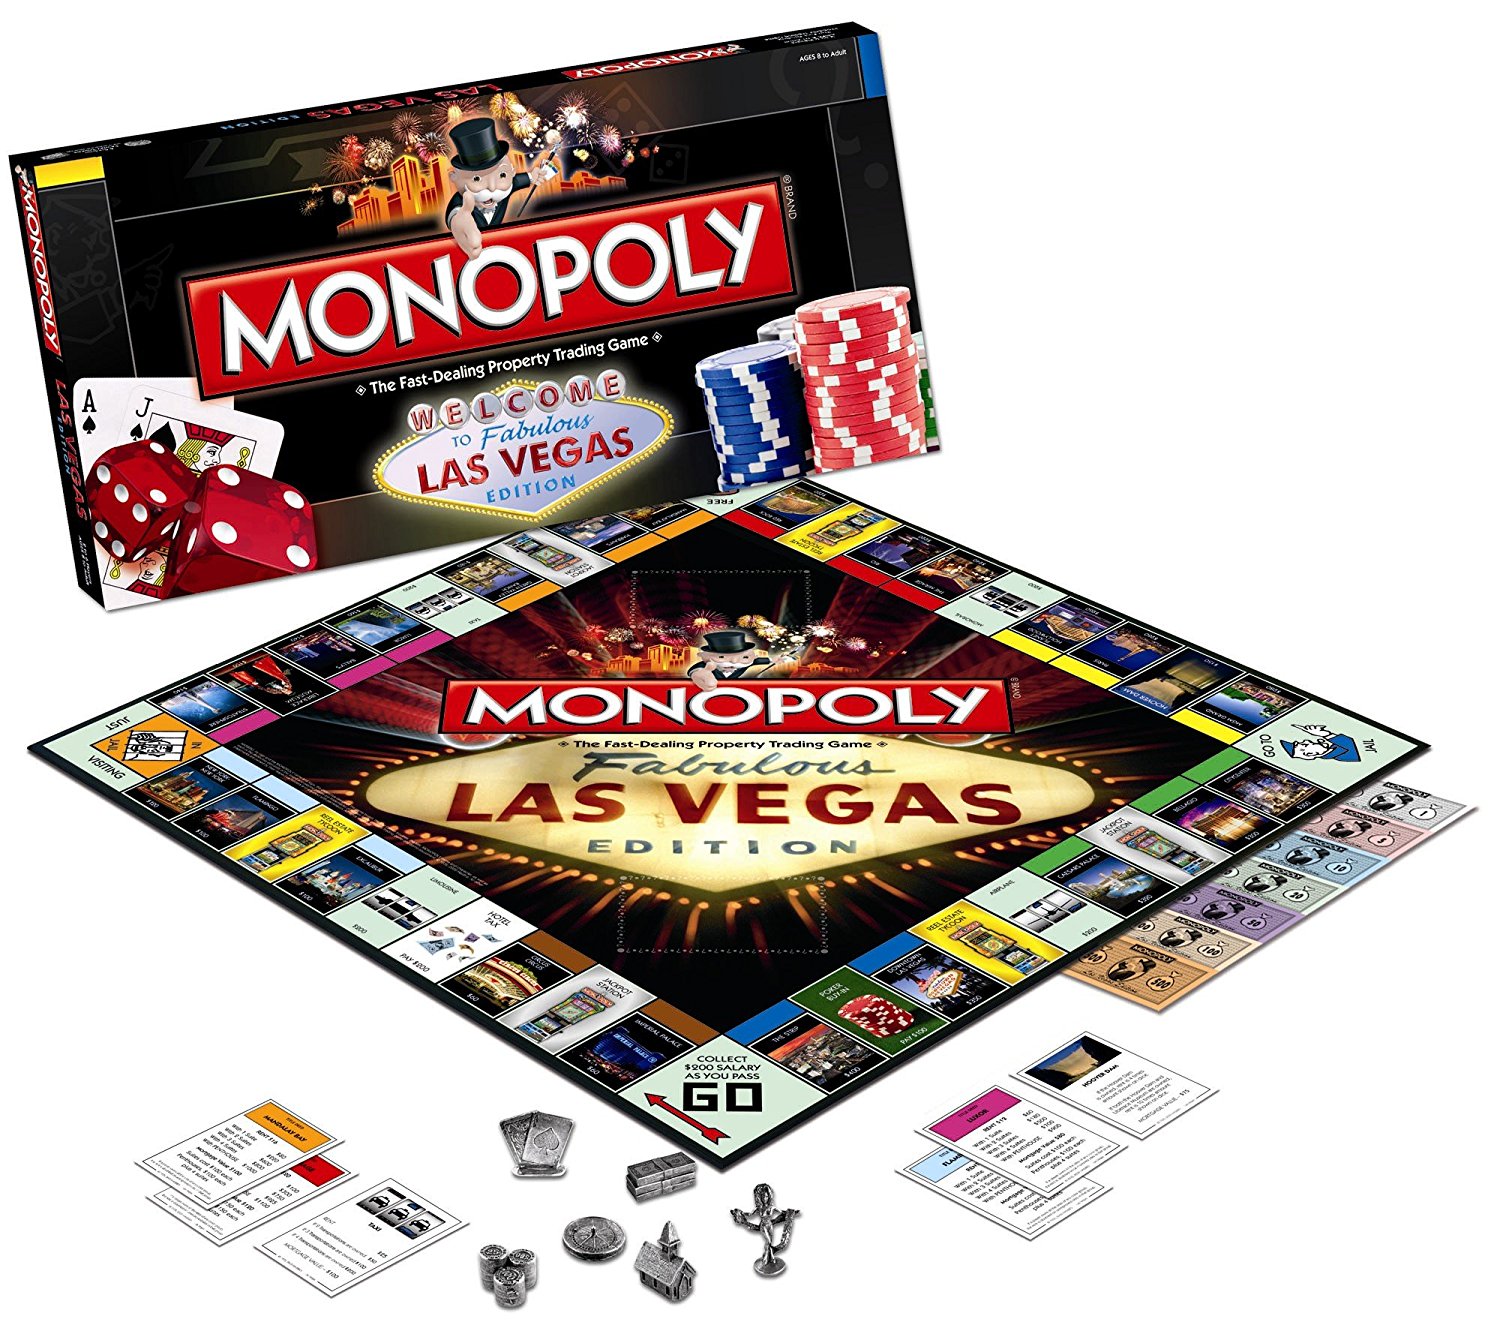 Dominance Gambling enterprise: Gamble Real cash Ports, Bingo, Slingo and much more